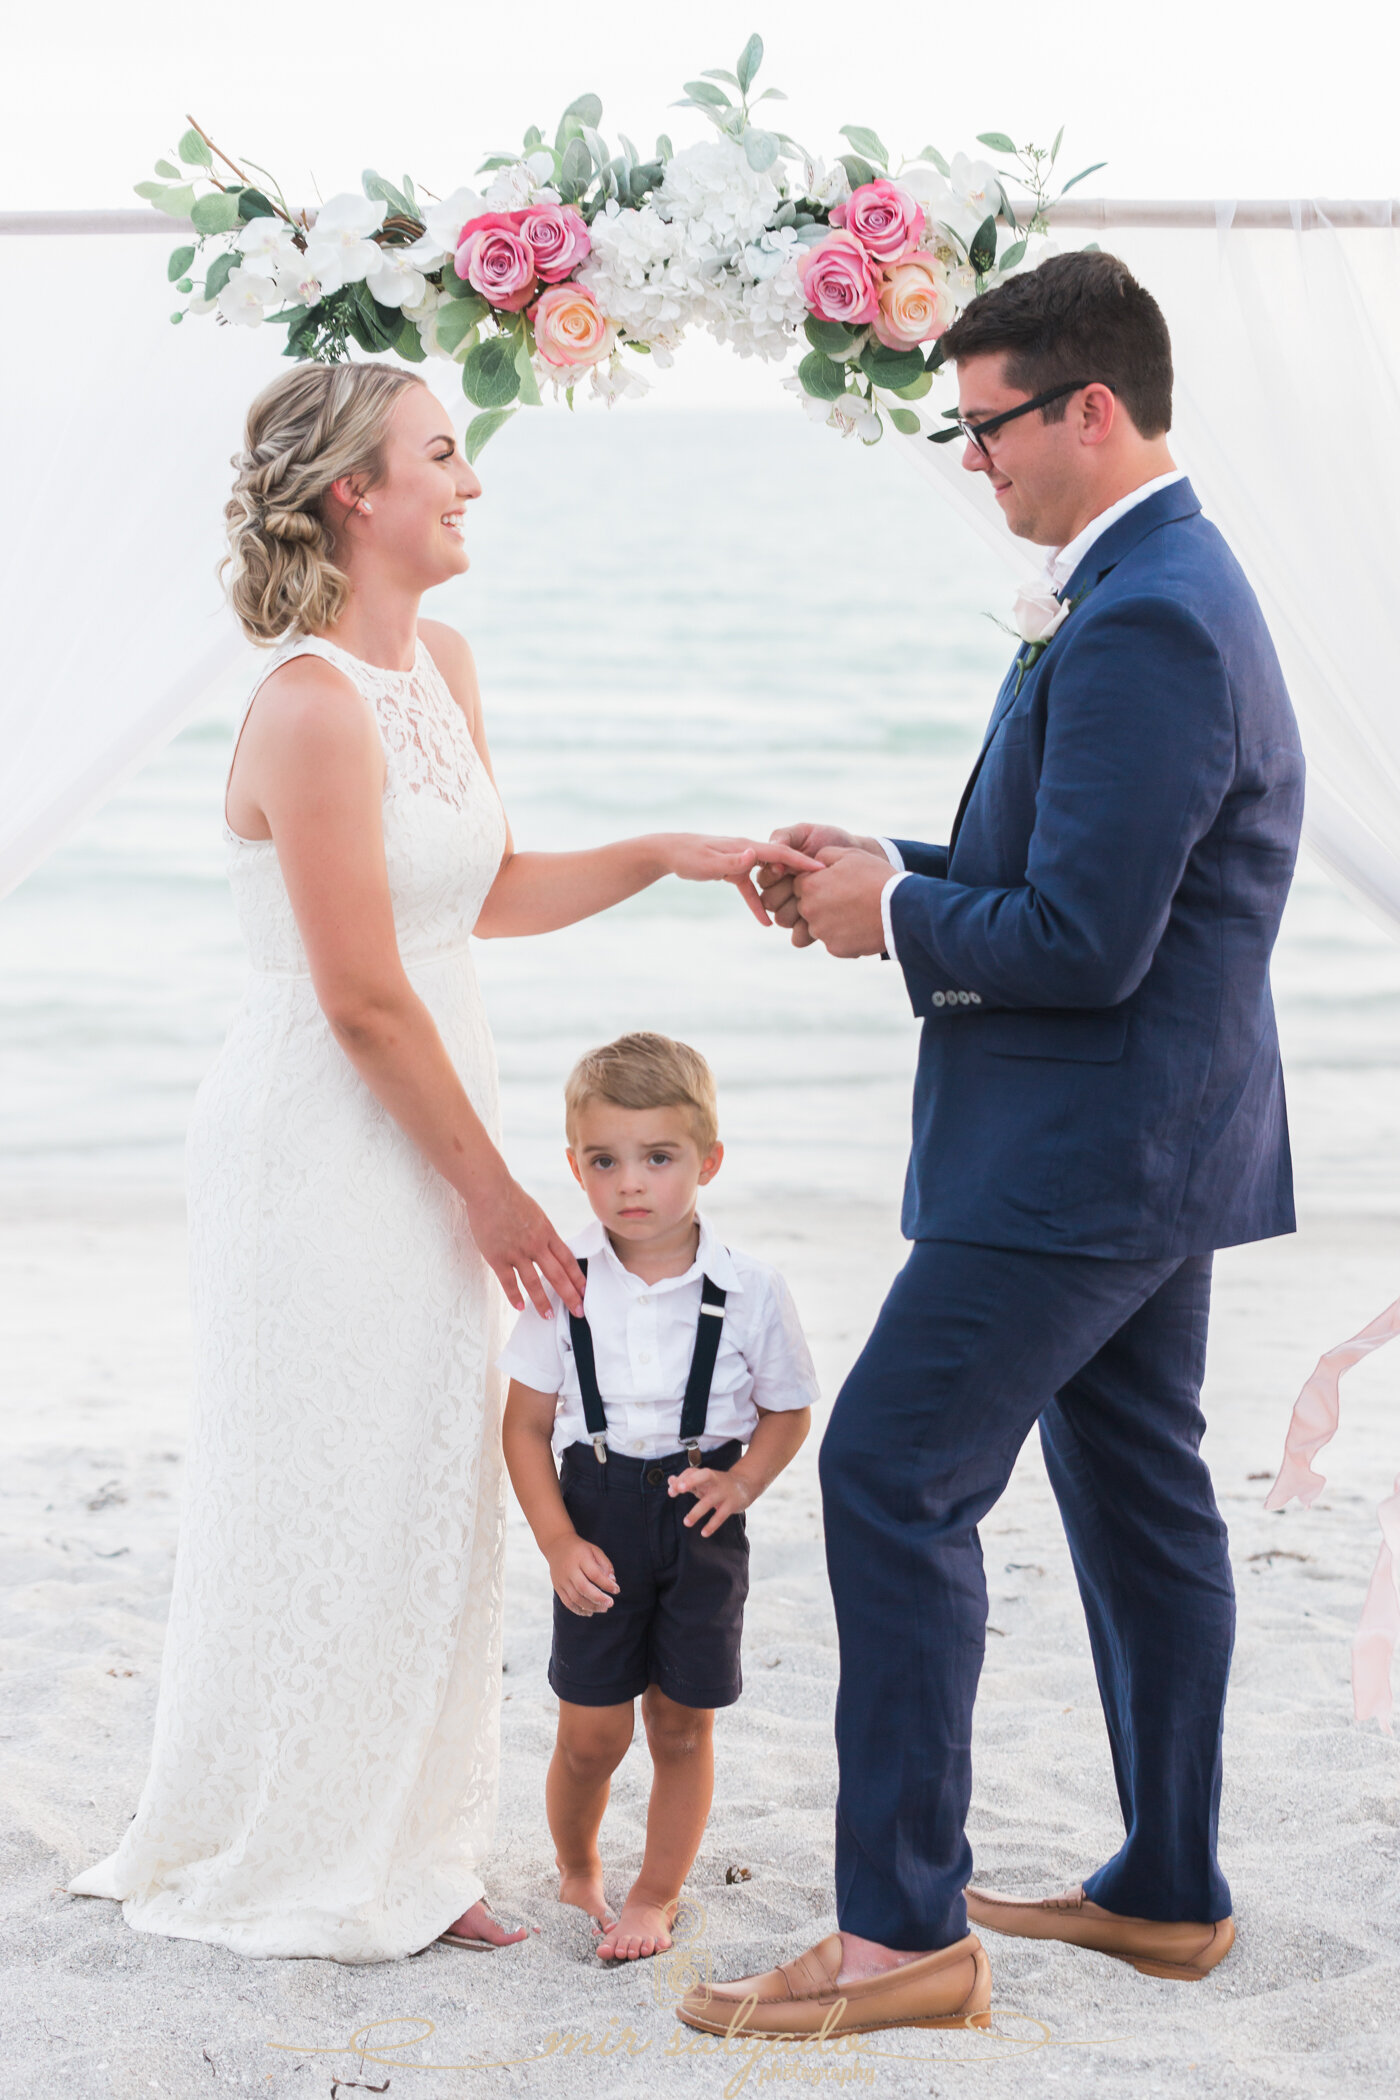 wedding-vows, beach-wedding-ceremony, resort-venue, bride-wedding-dress, groom-outfit